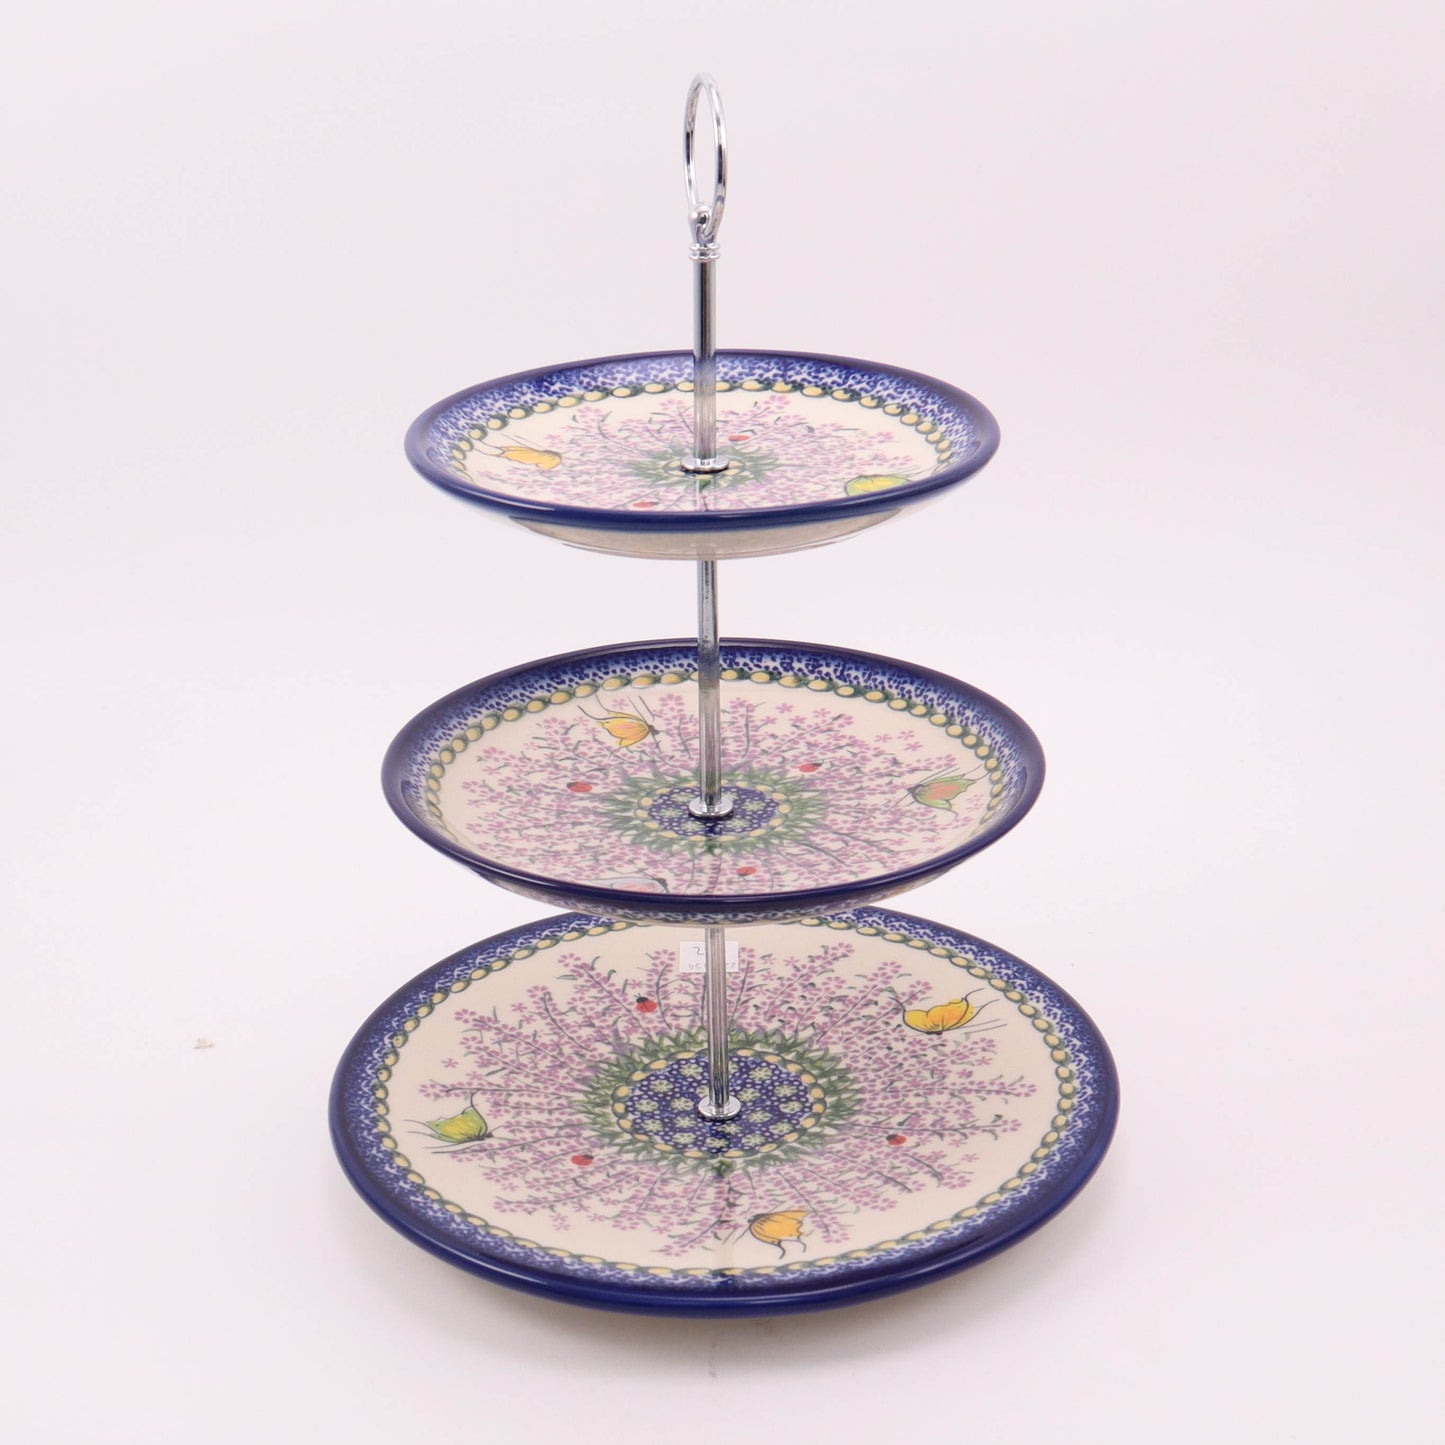 9"x9.5" 3-tier Round Cake Plate. Pattern: Lavender Fields